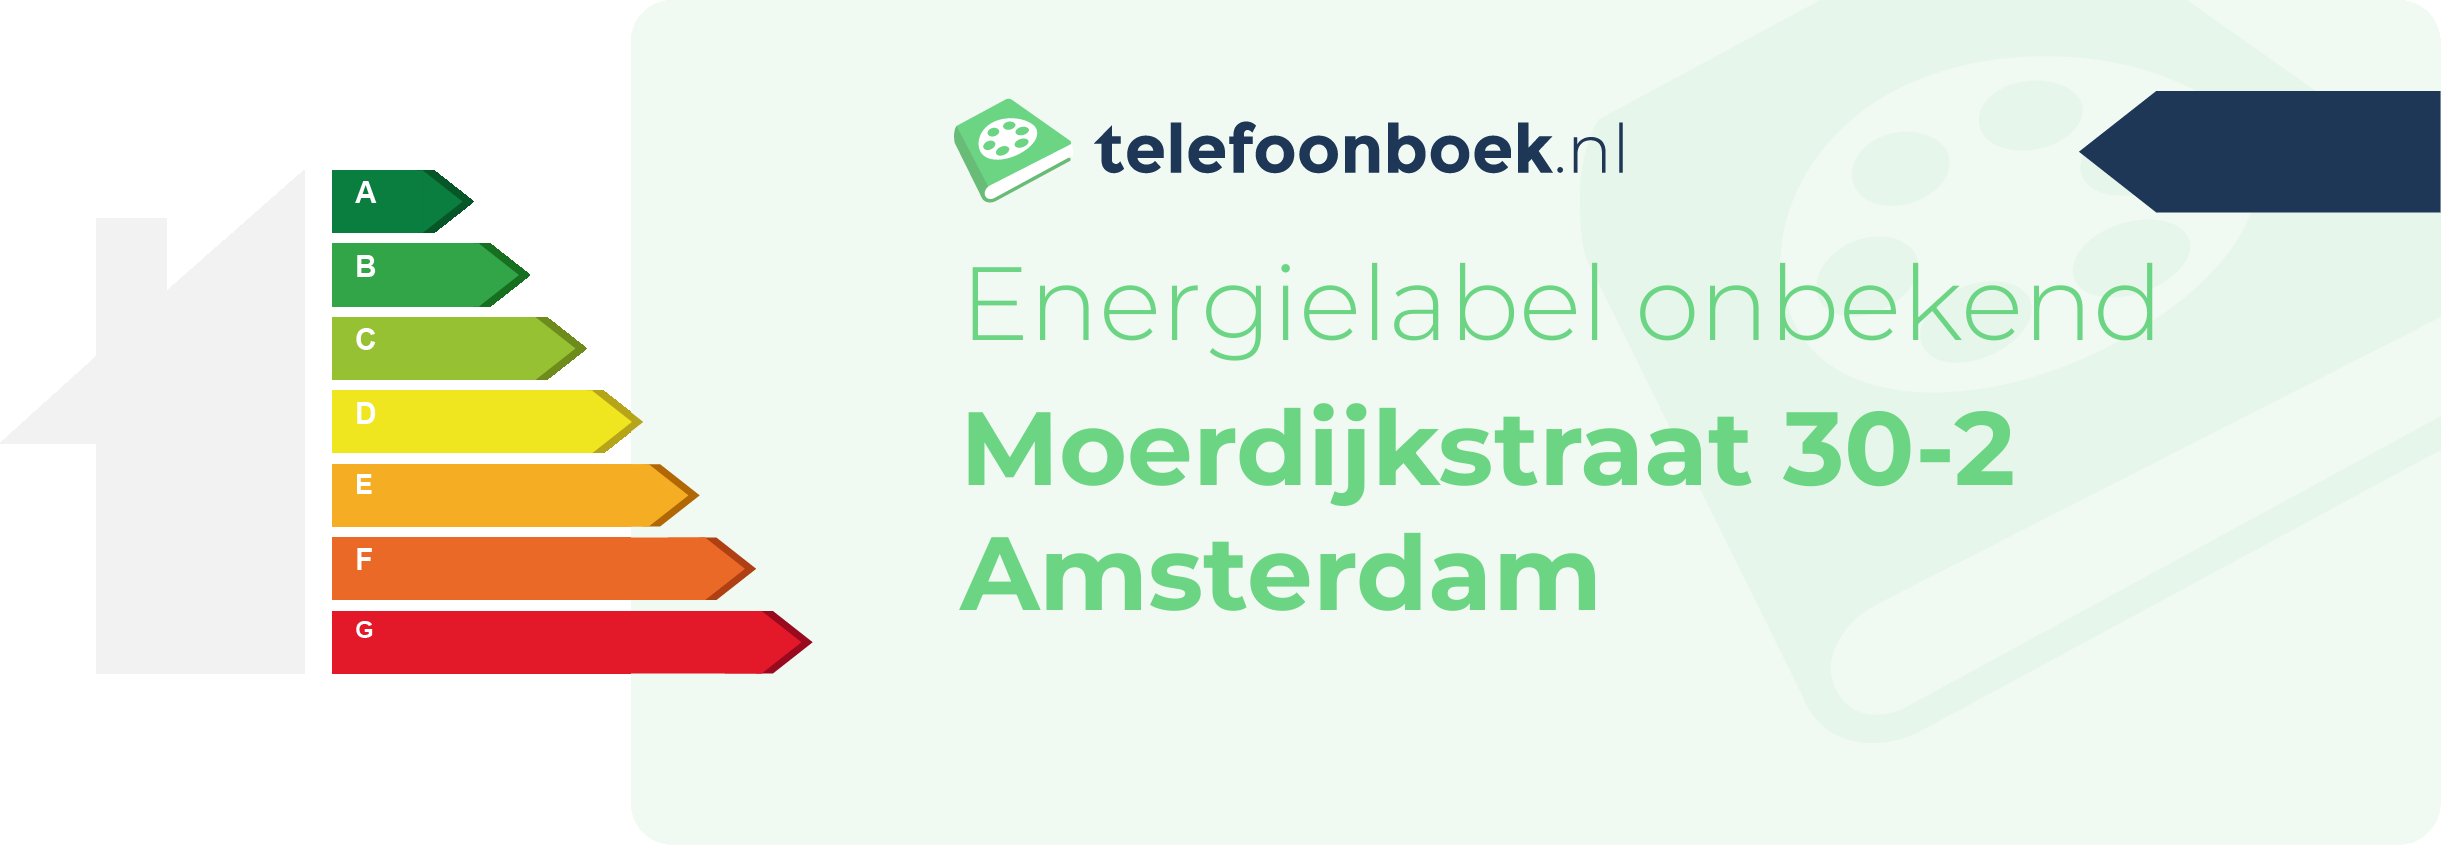 Energielabel Moerdijkstraat 30-2 Amsterdam